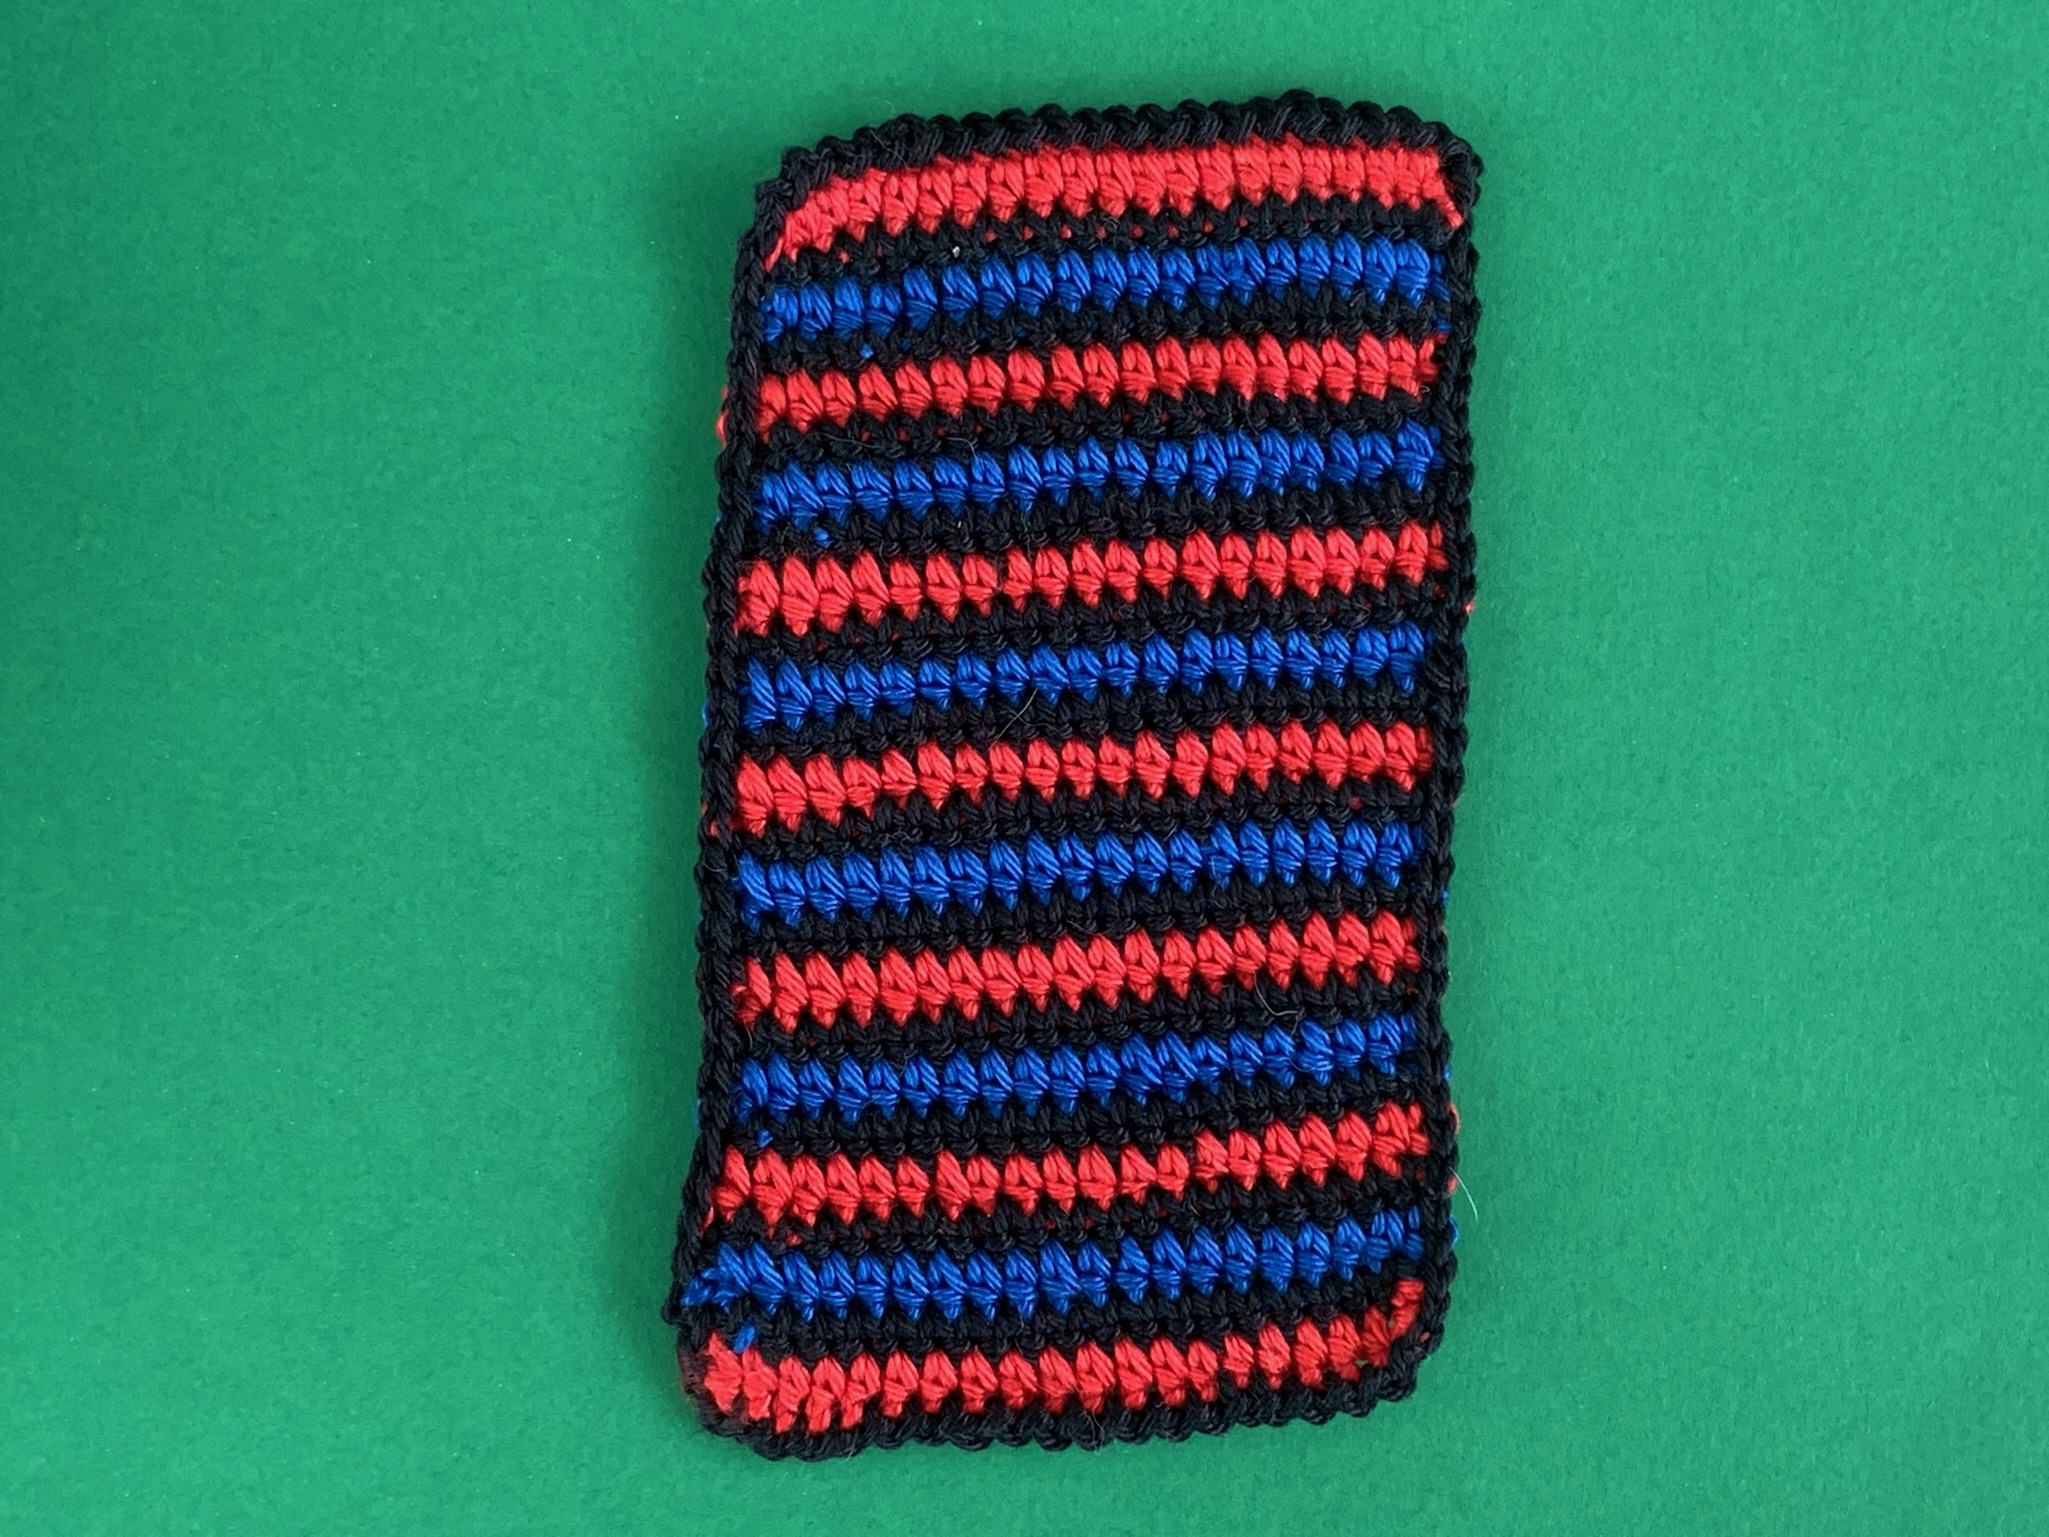 Finished crochet beach towel 4 ply landscape